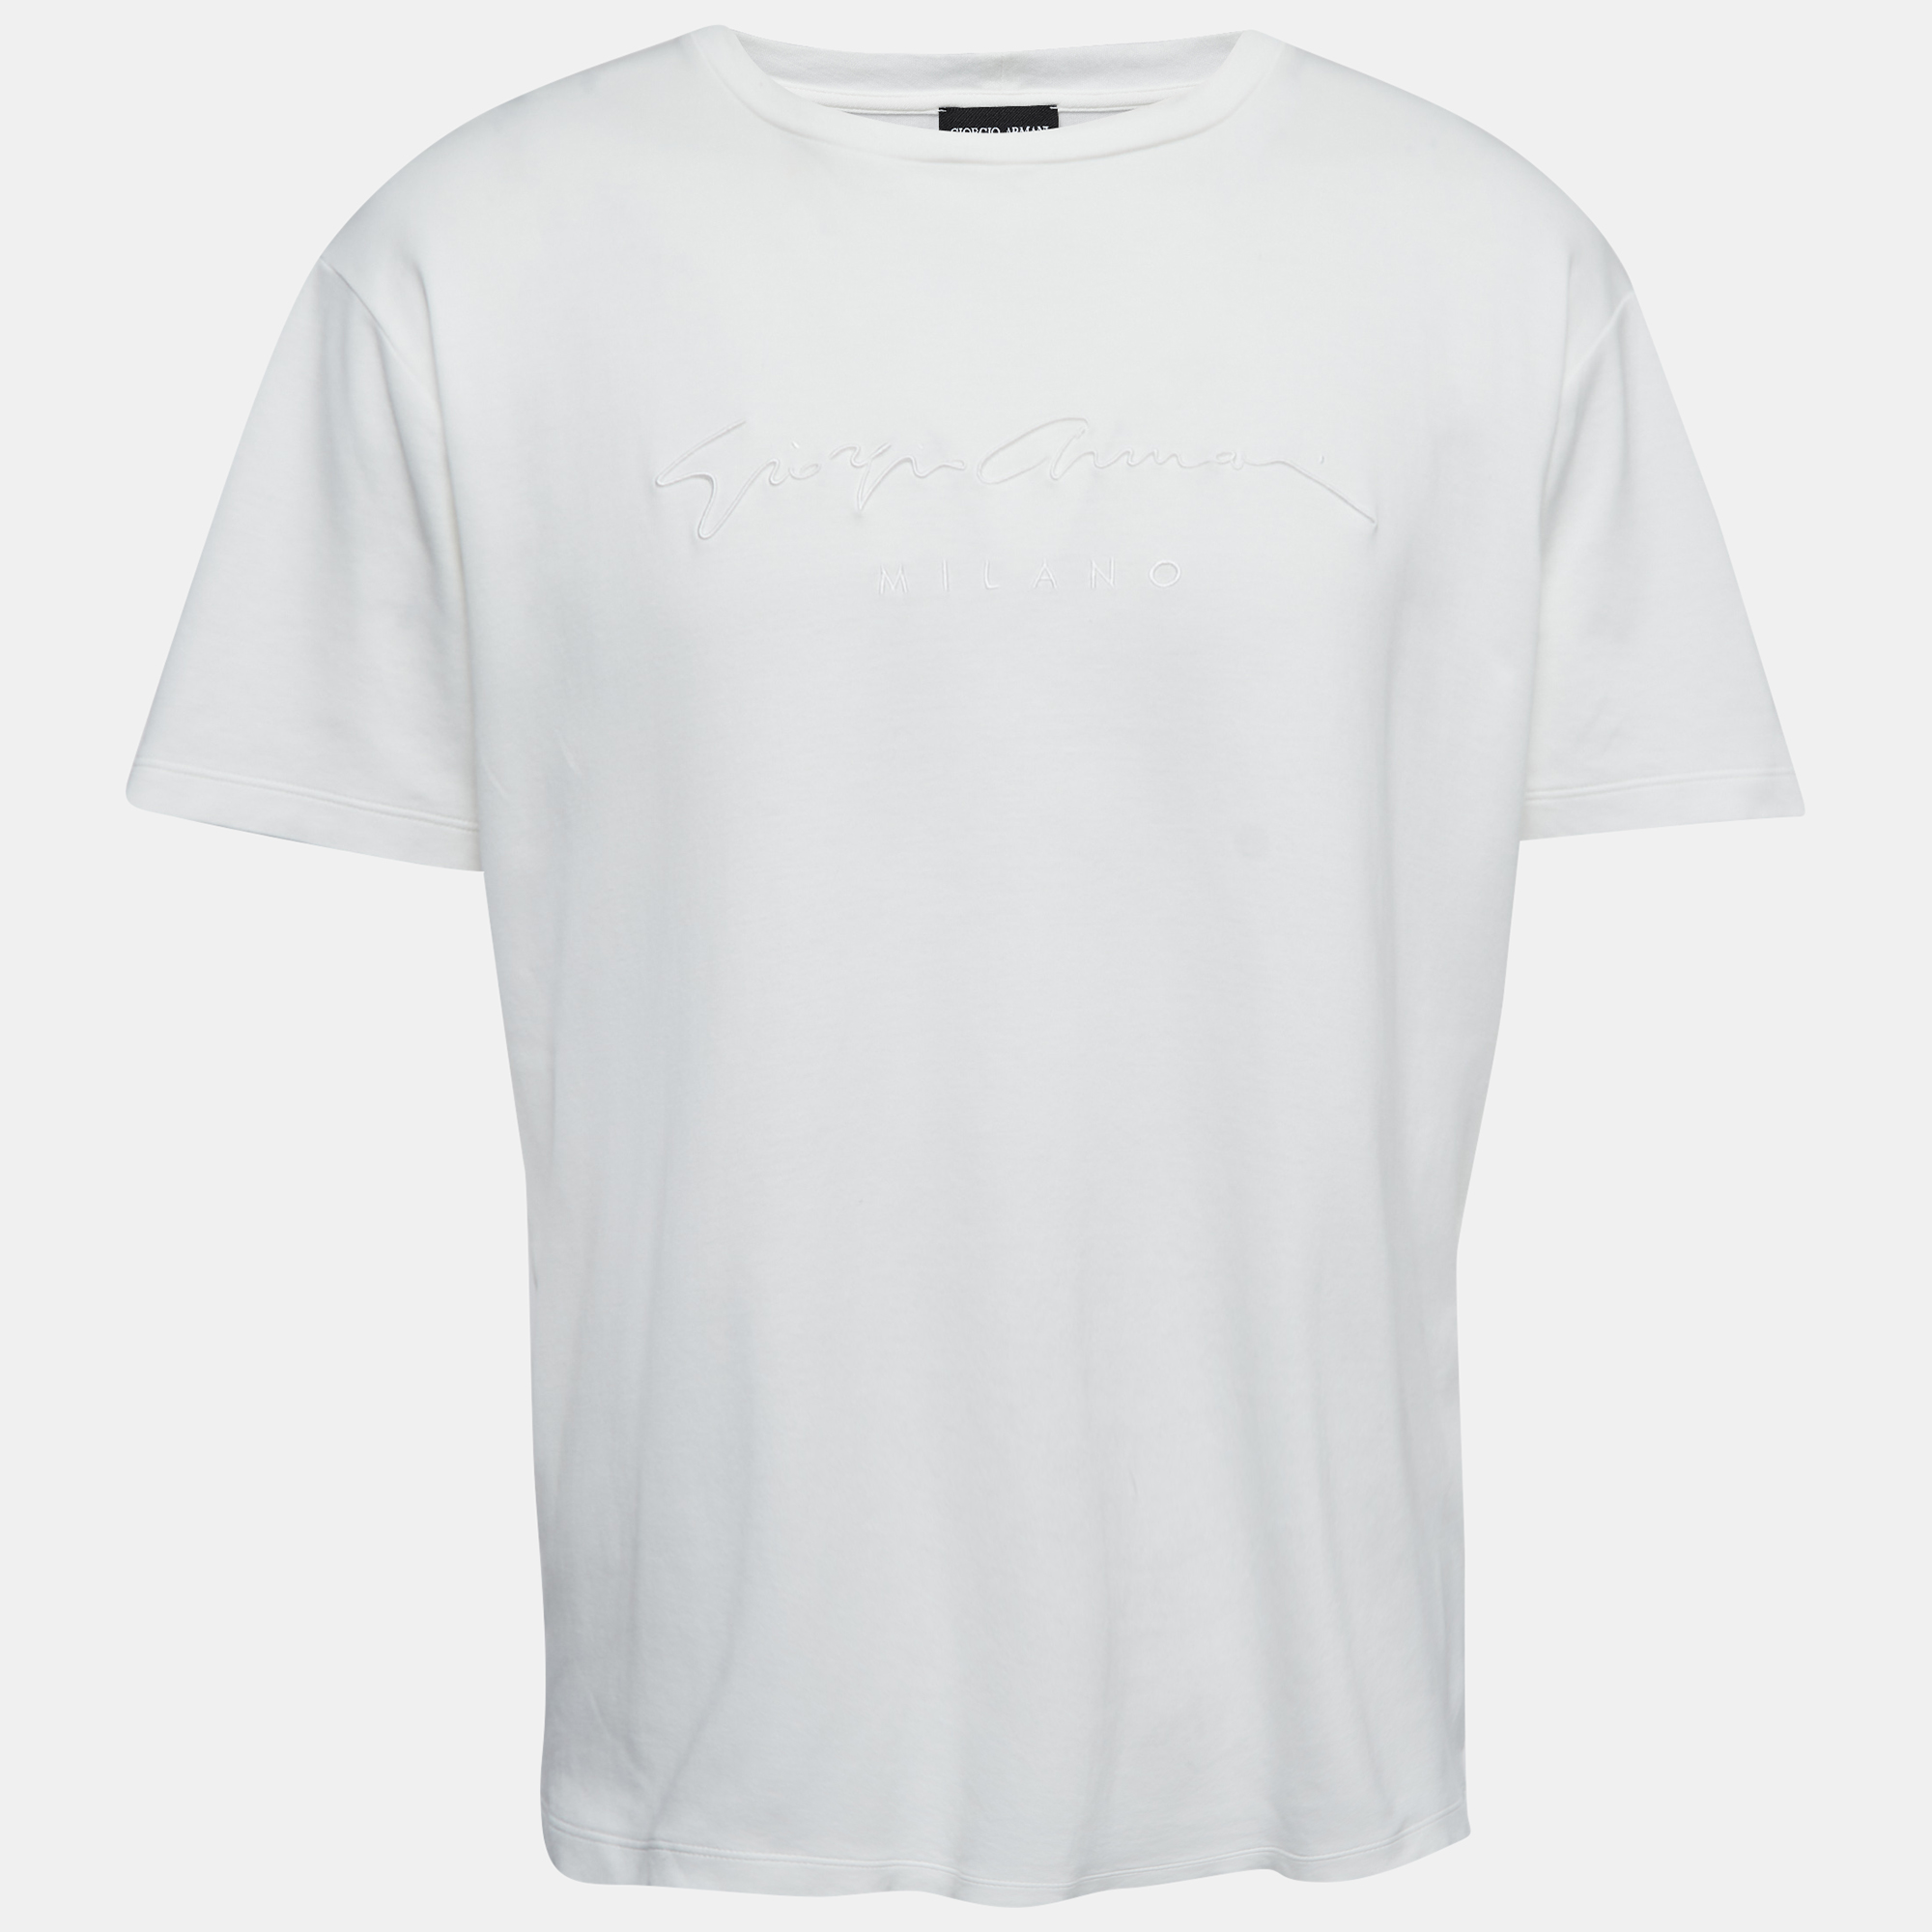 Giorgio Armani White Cotton Signature Logo Embroidered T-Shirt XL